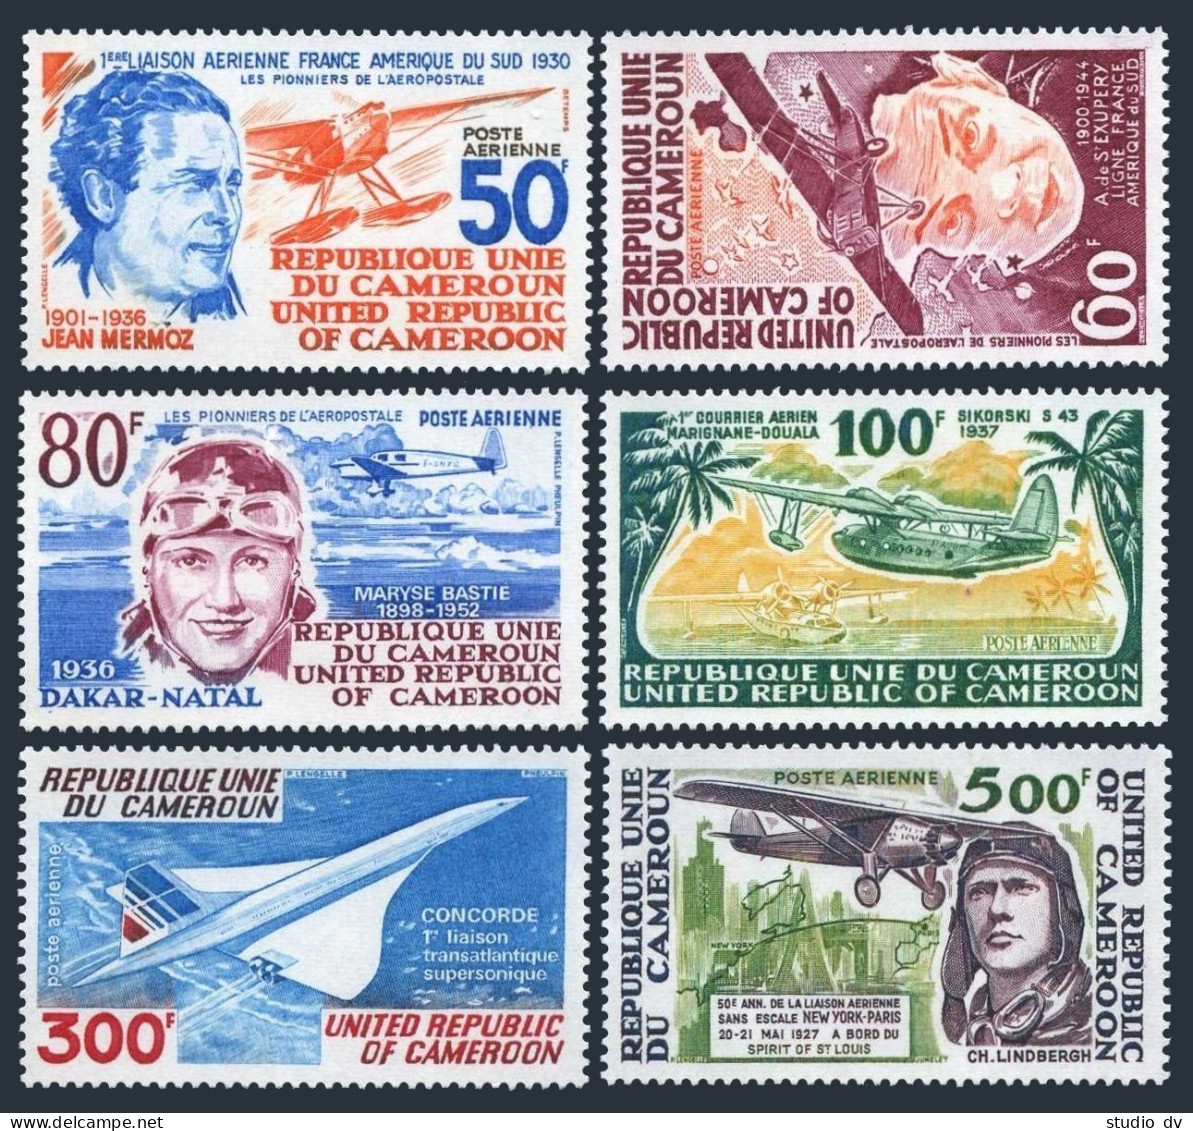 Cameroun C245-C250, MNH. Michel 843-848. Aviation Pioneers, Events. 1977.Mermoz, - Cameroon (1960-...)